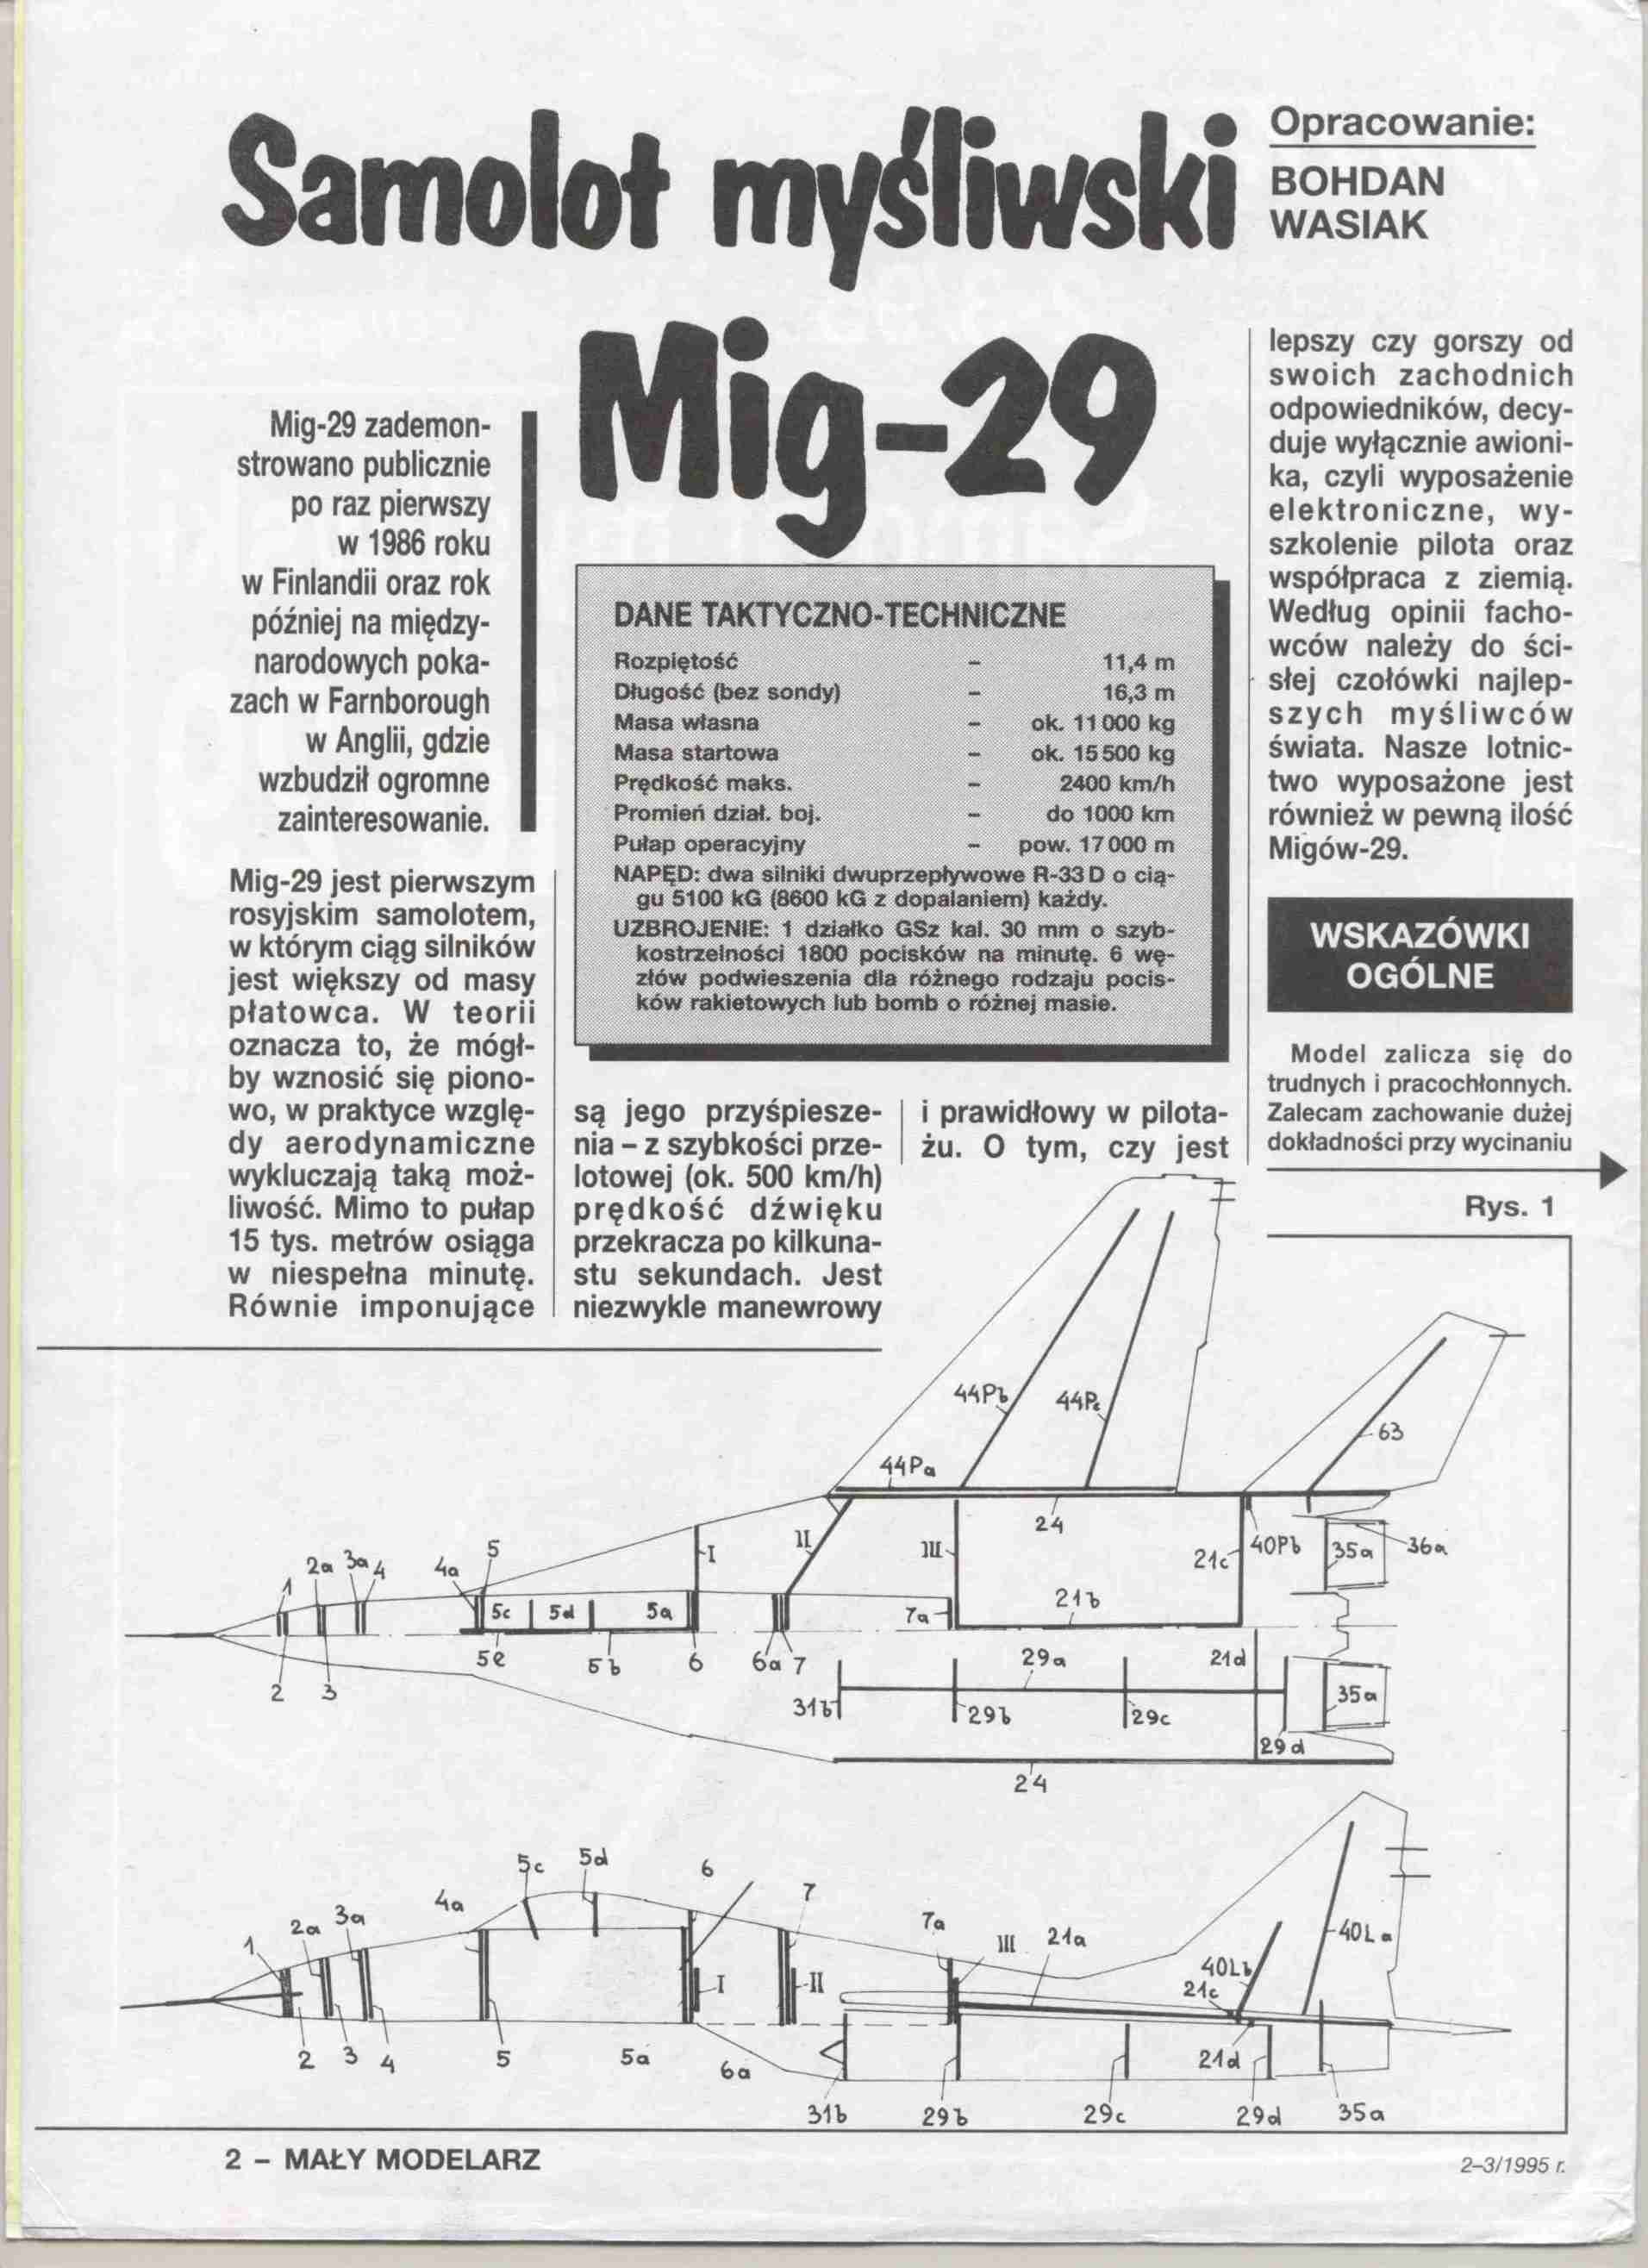 "Maly Modelarz" 2-3, 1995, 2 c.